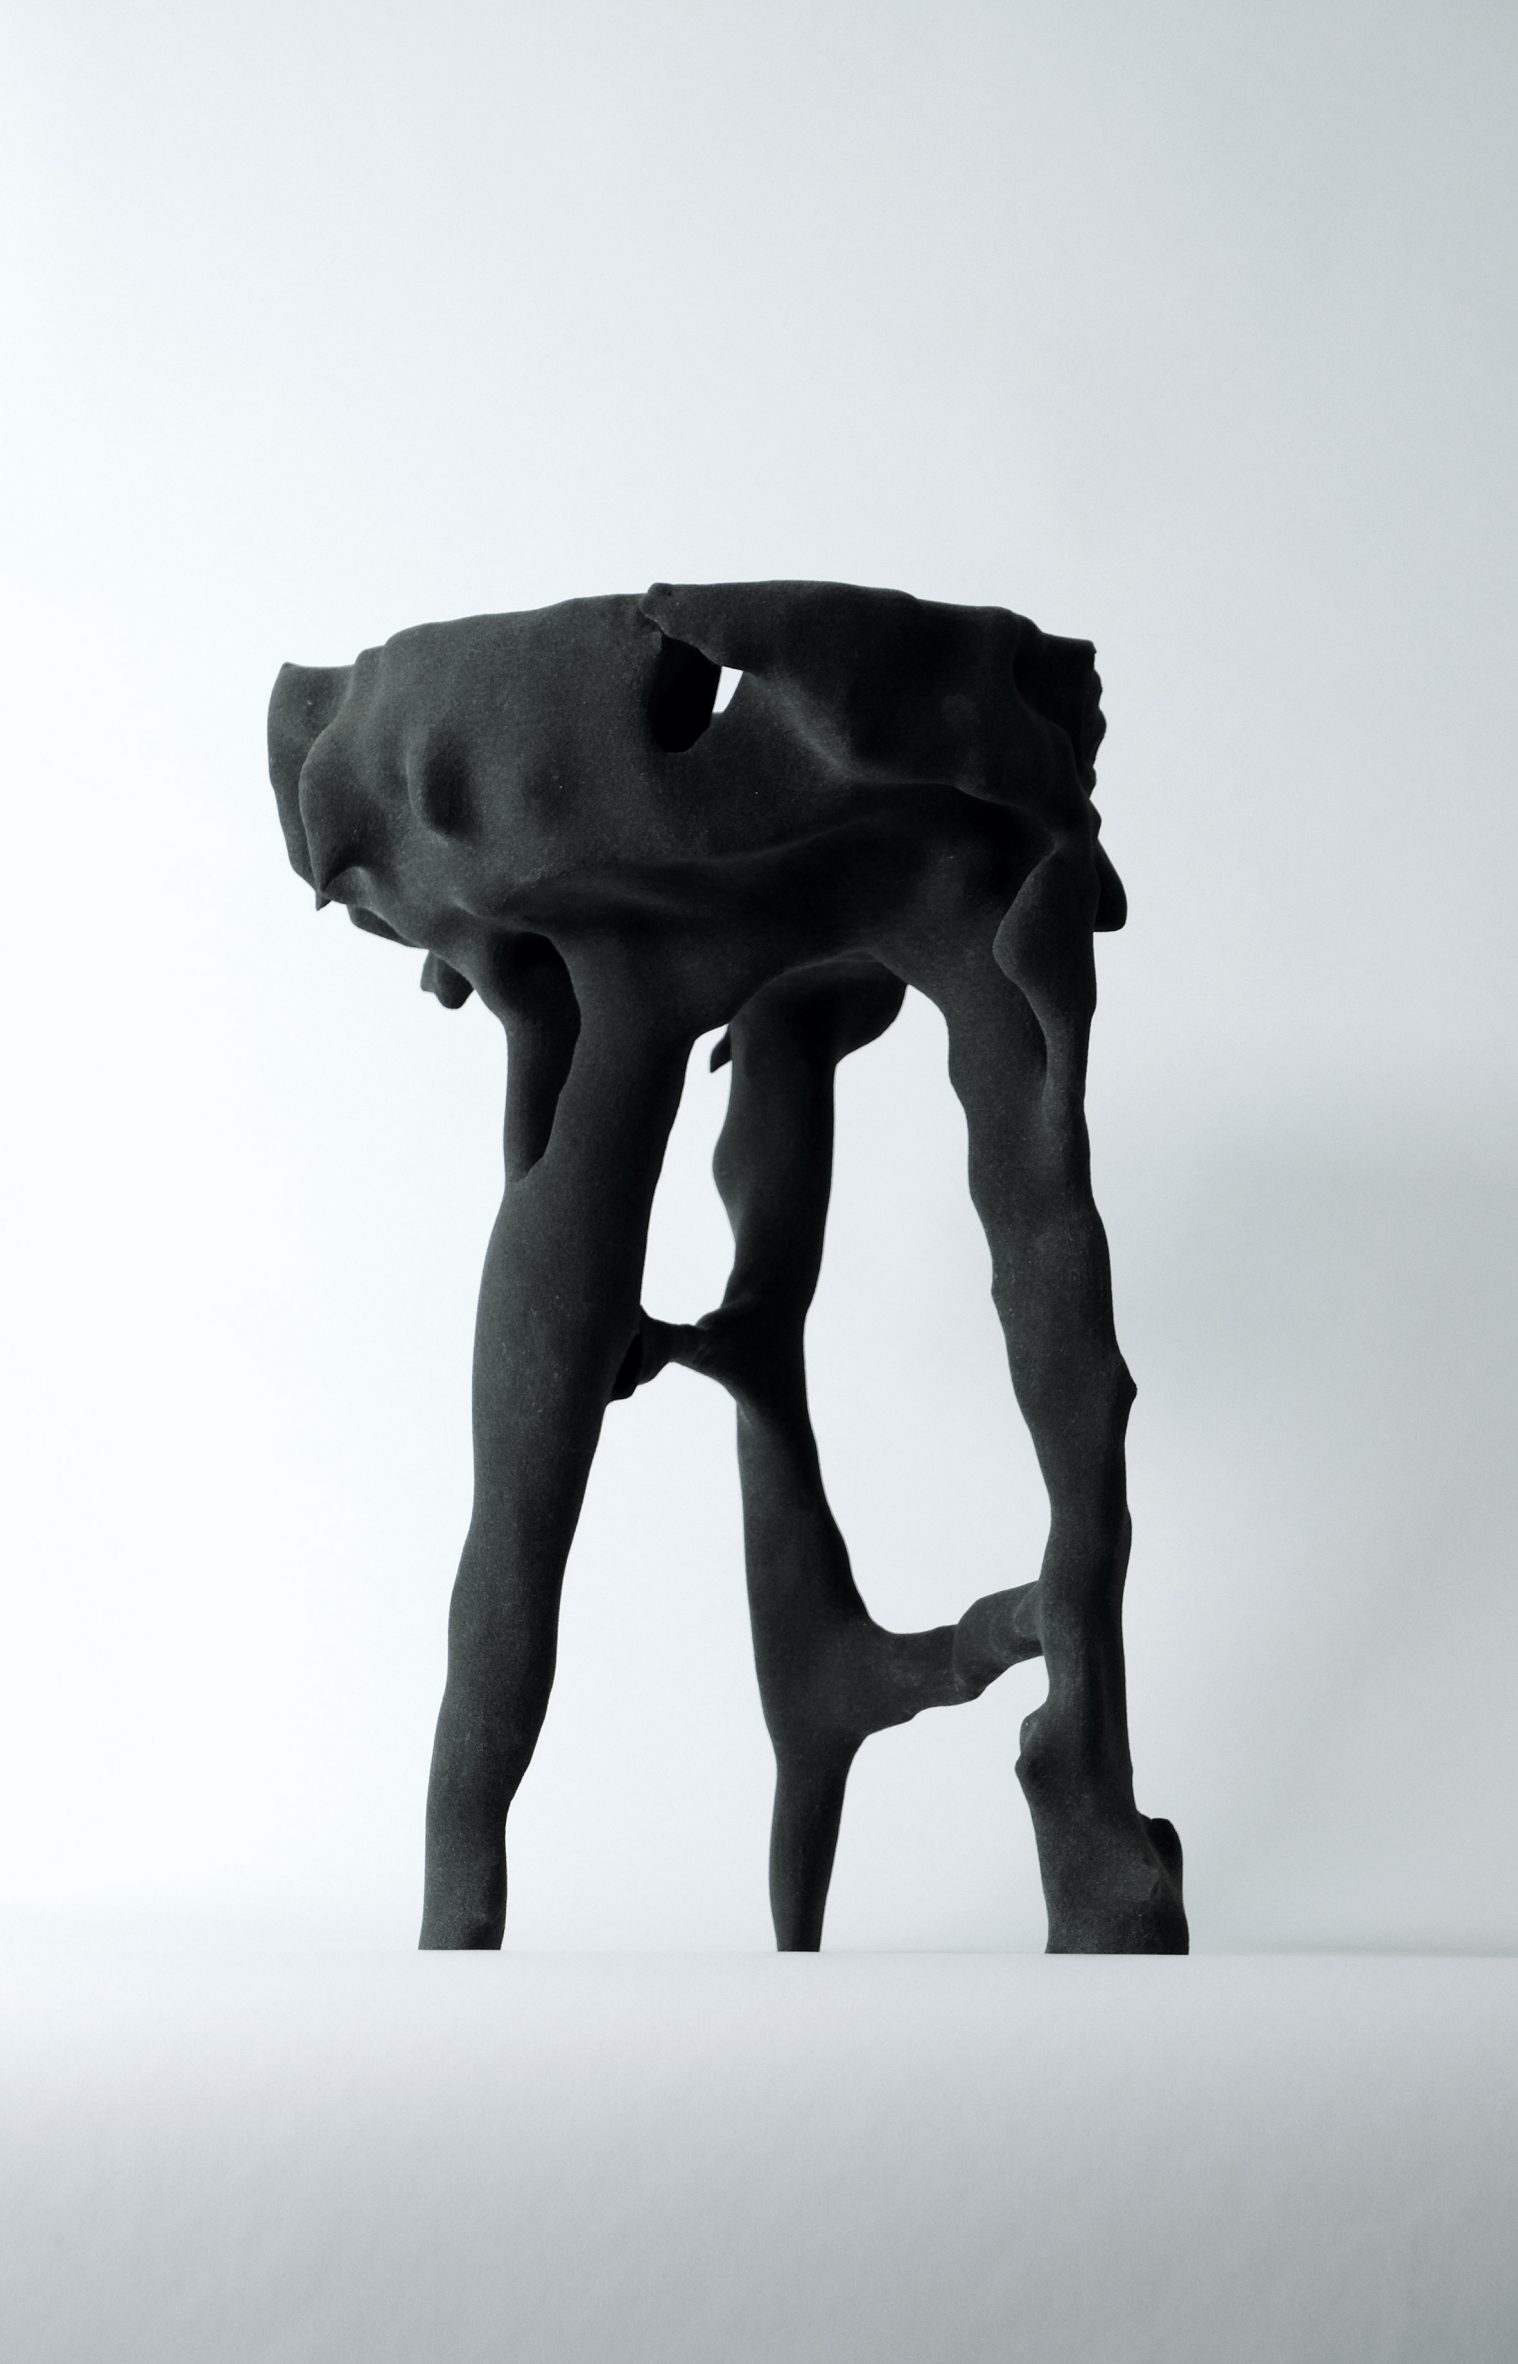 Photo of a gnarled, complex-shaped three-legged stool in a matt black material